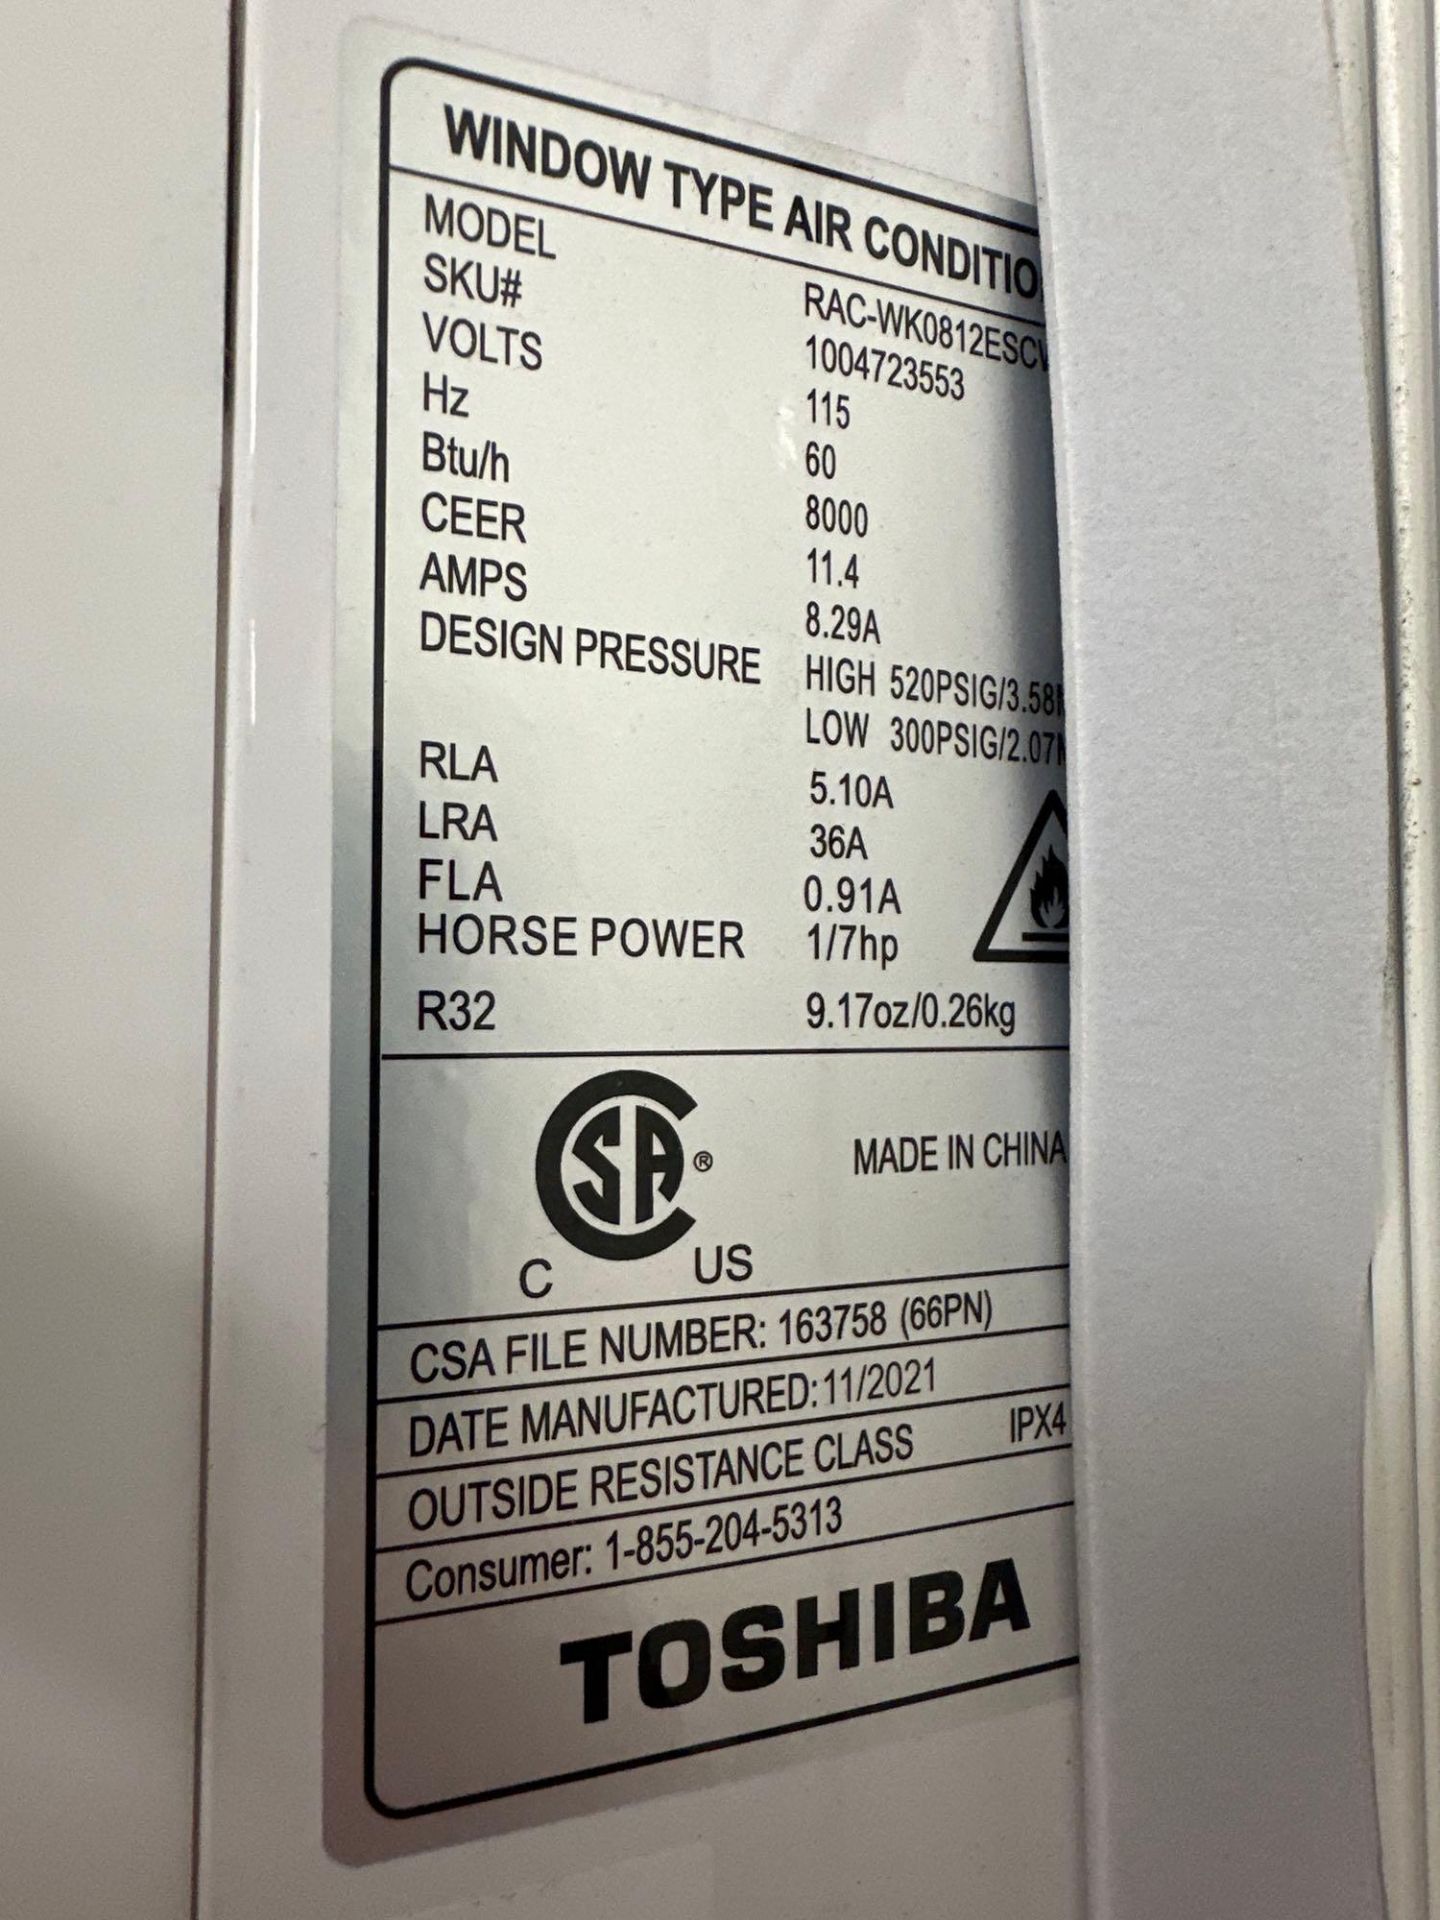 Toshiba Window Air Condition Unit - Image 4 of 4